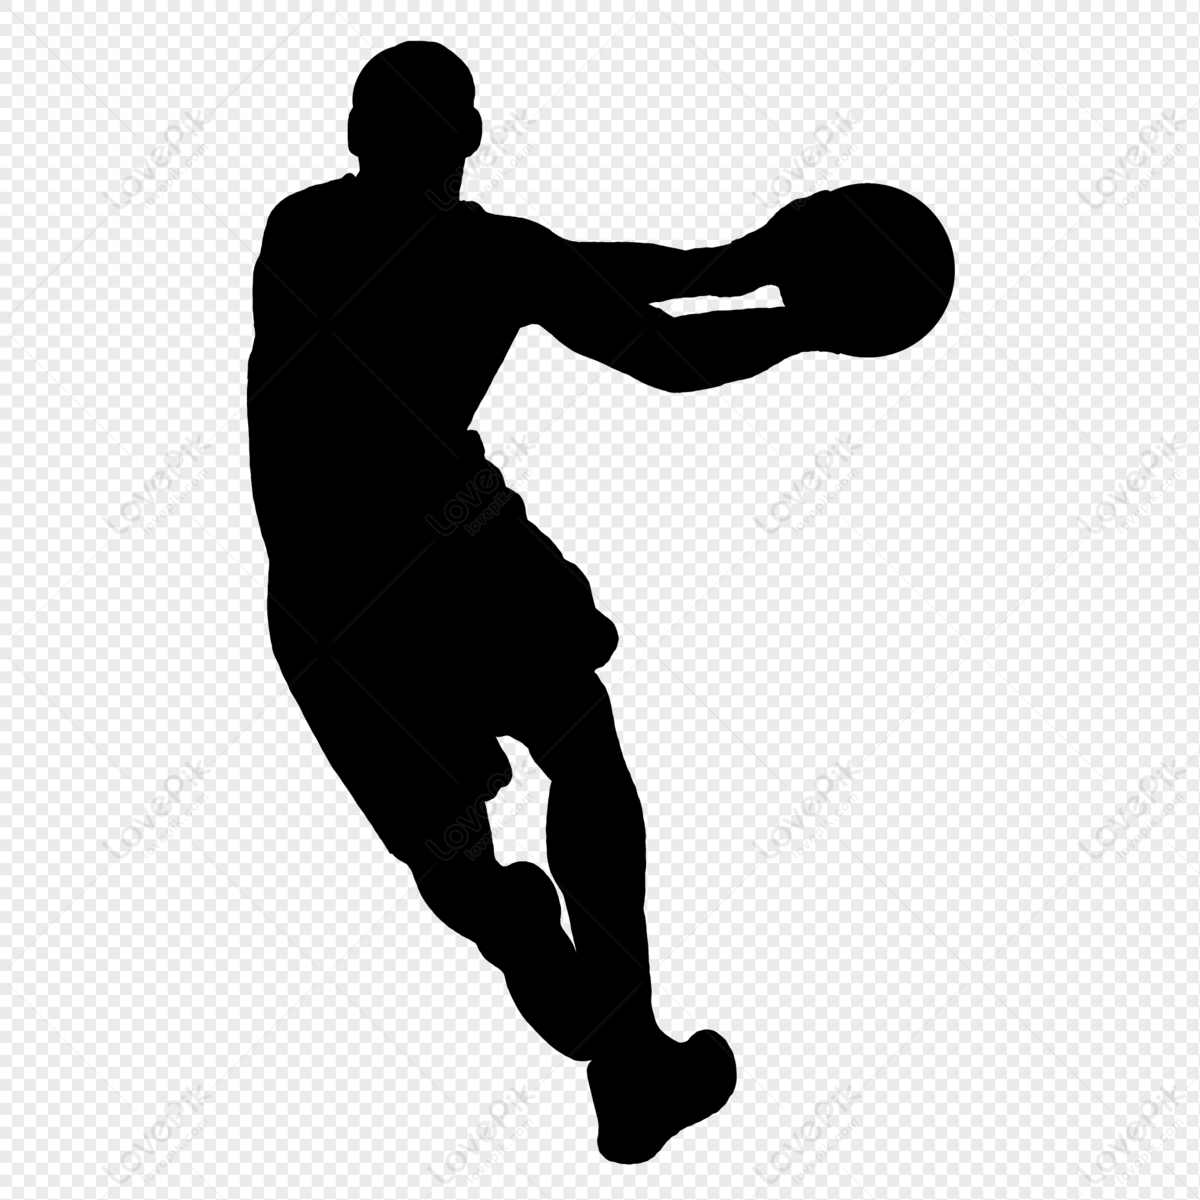 Basketball pass silhouette, ball silhouette, basketball silhouette, basketball player png image